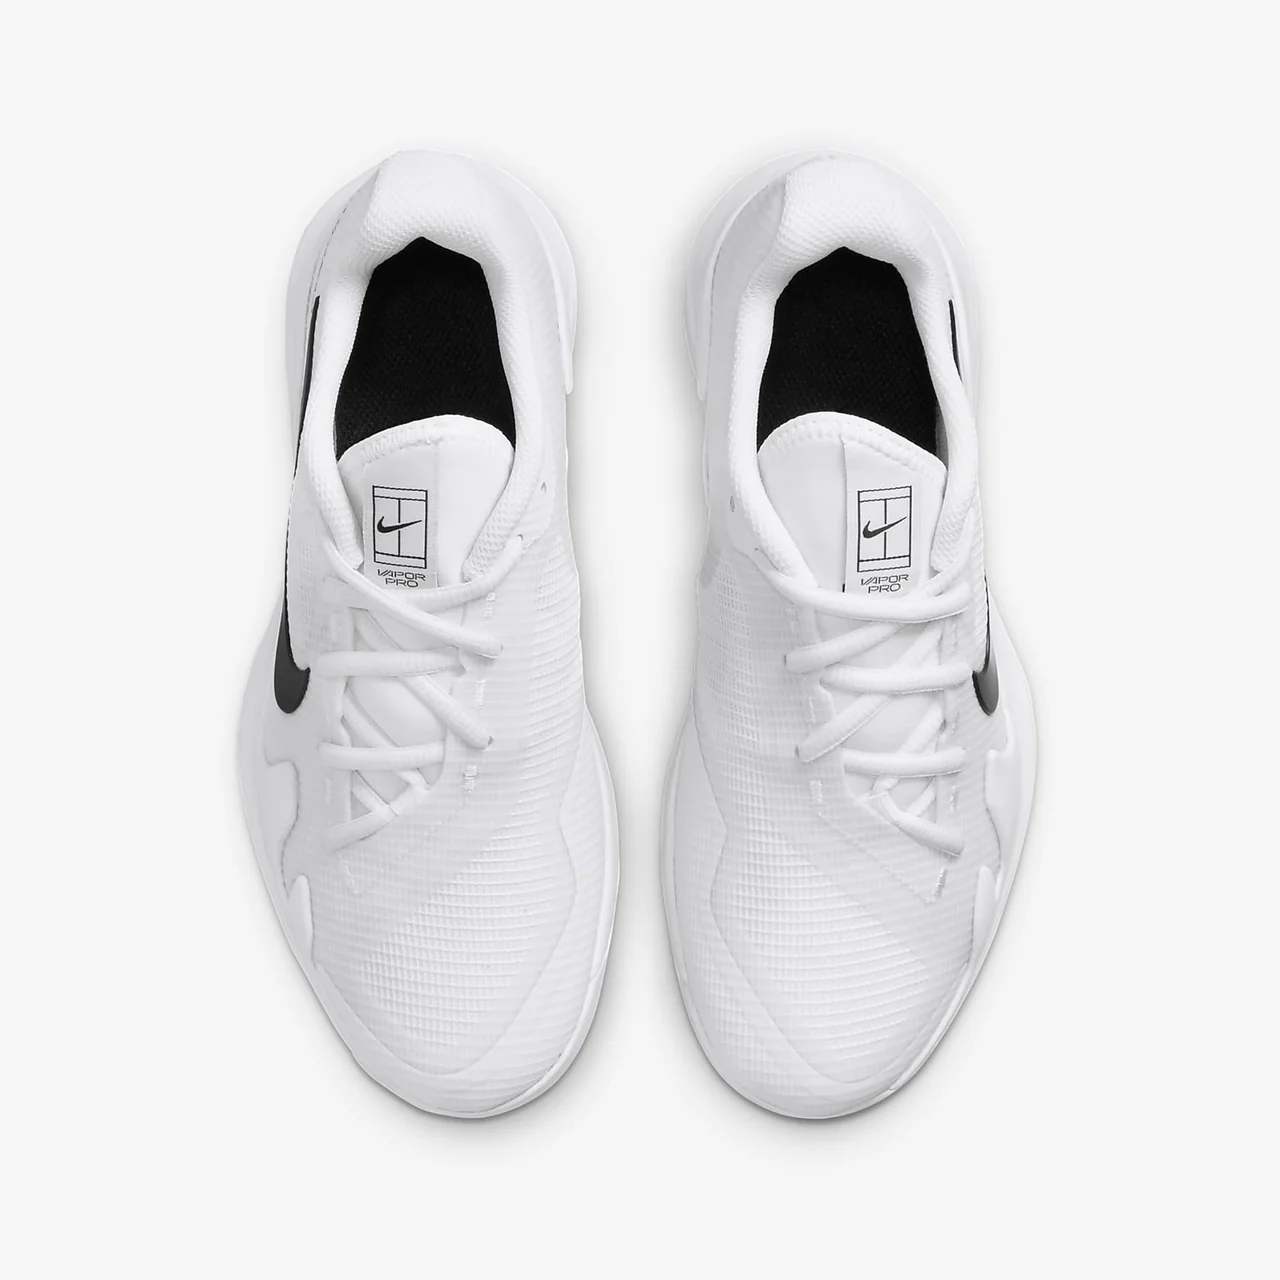 Nike Vapor Pro Junior White/Black